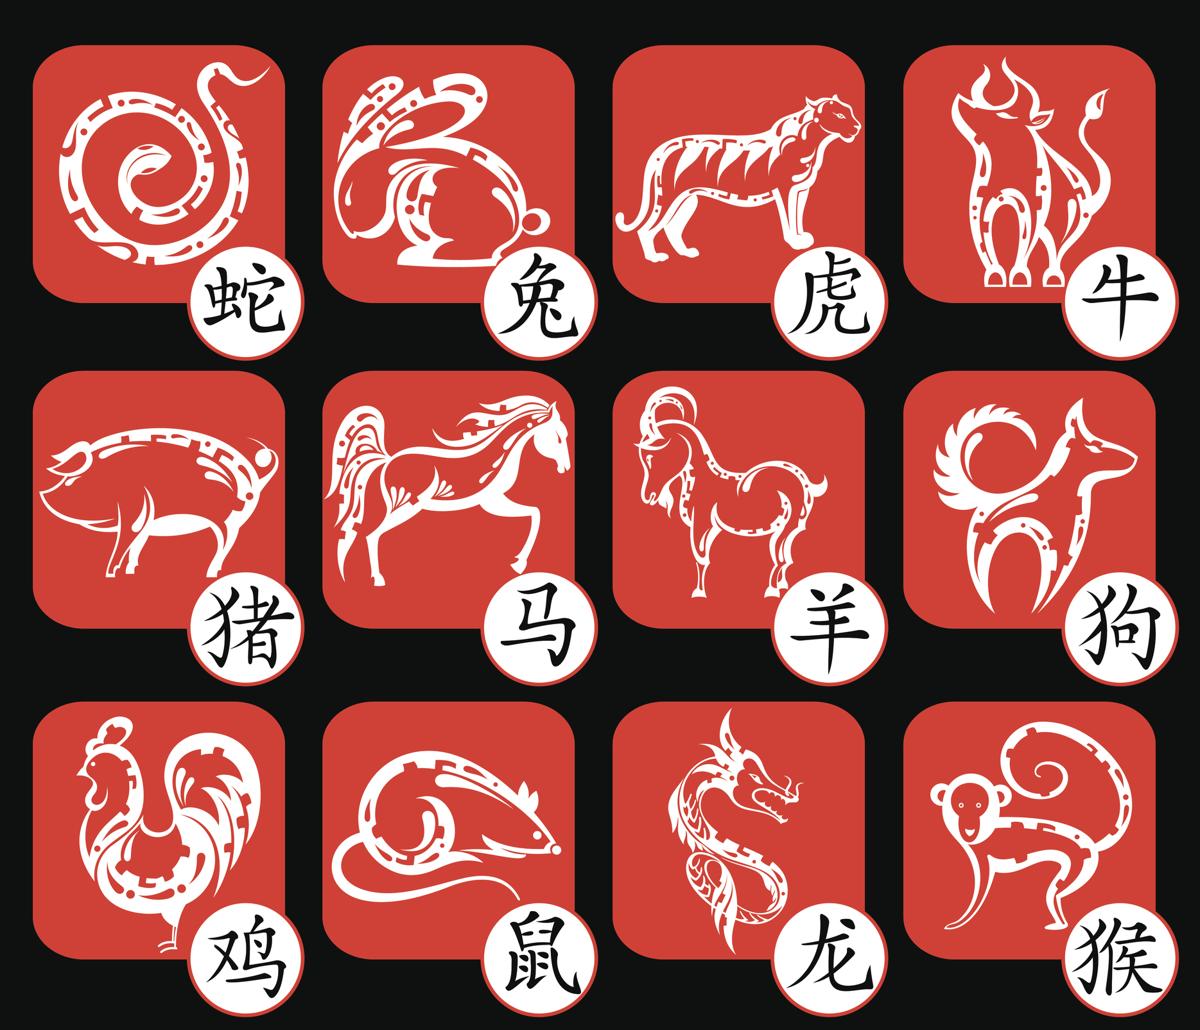 Zodiac Signs and Symbols